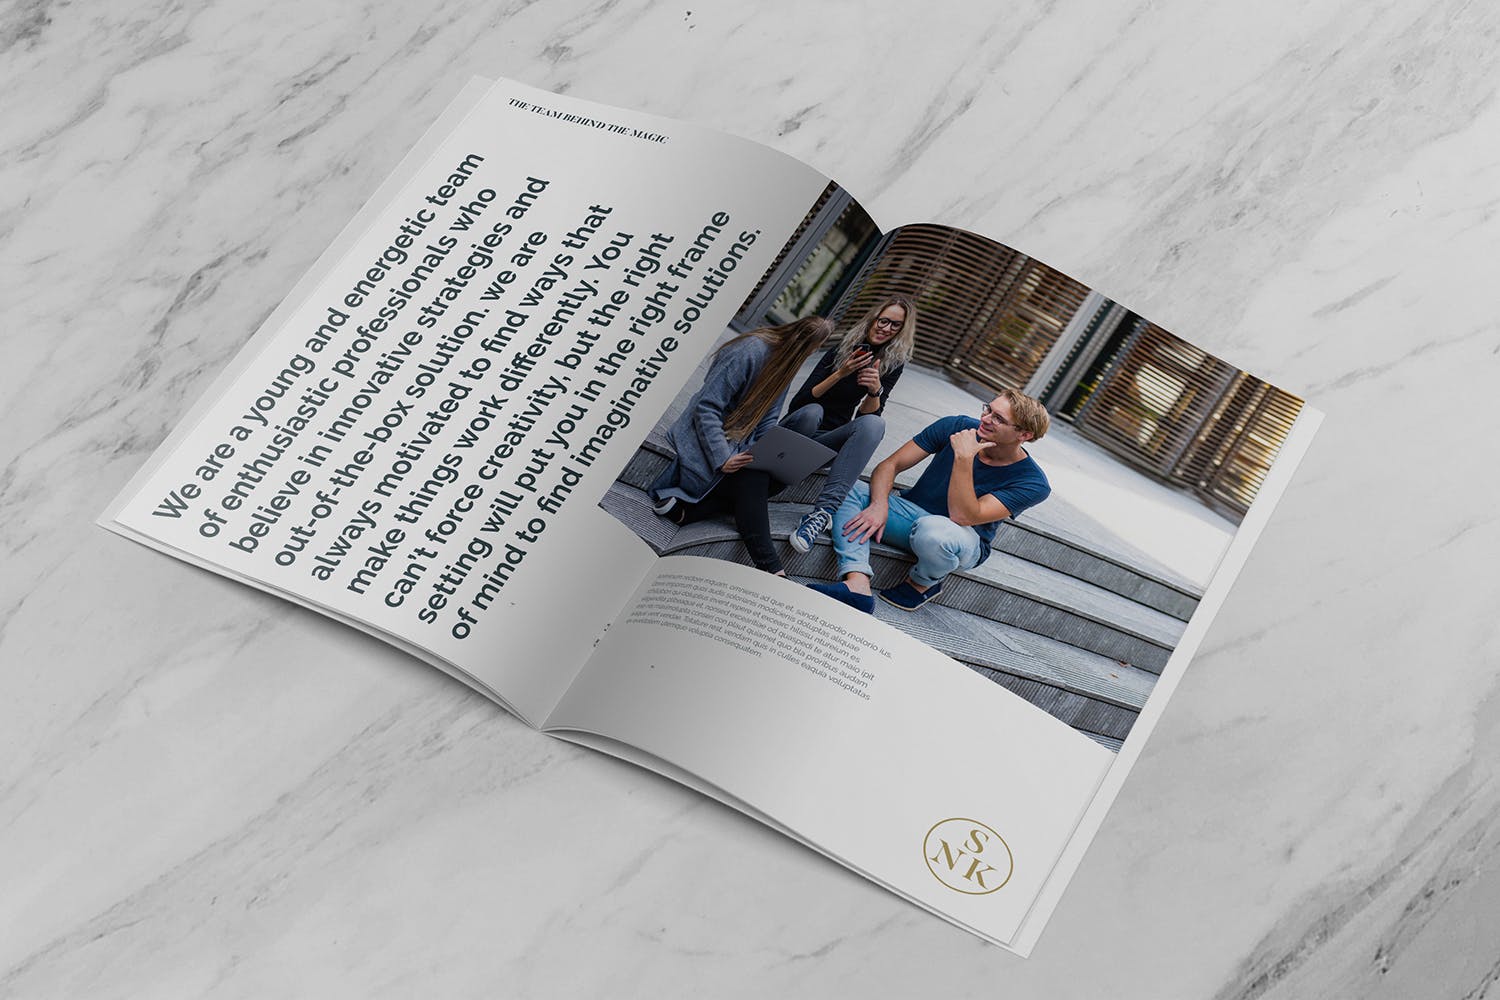 A4宣传小册子/企业画册内页排版设计效果图样机第一素材精选 A4 Brochure Mockup Open Pages插图(2)